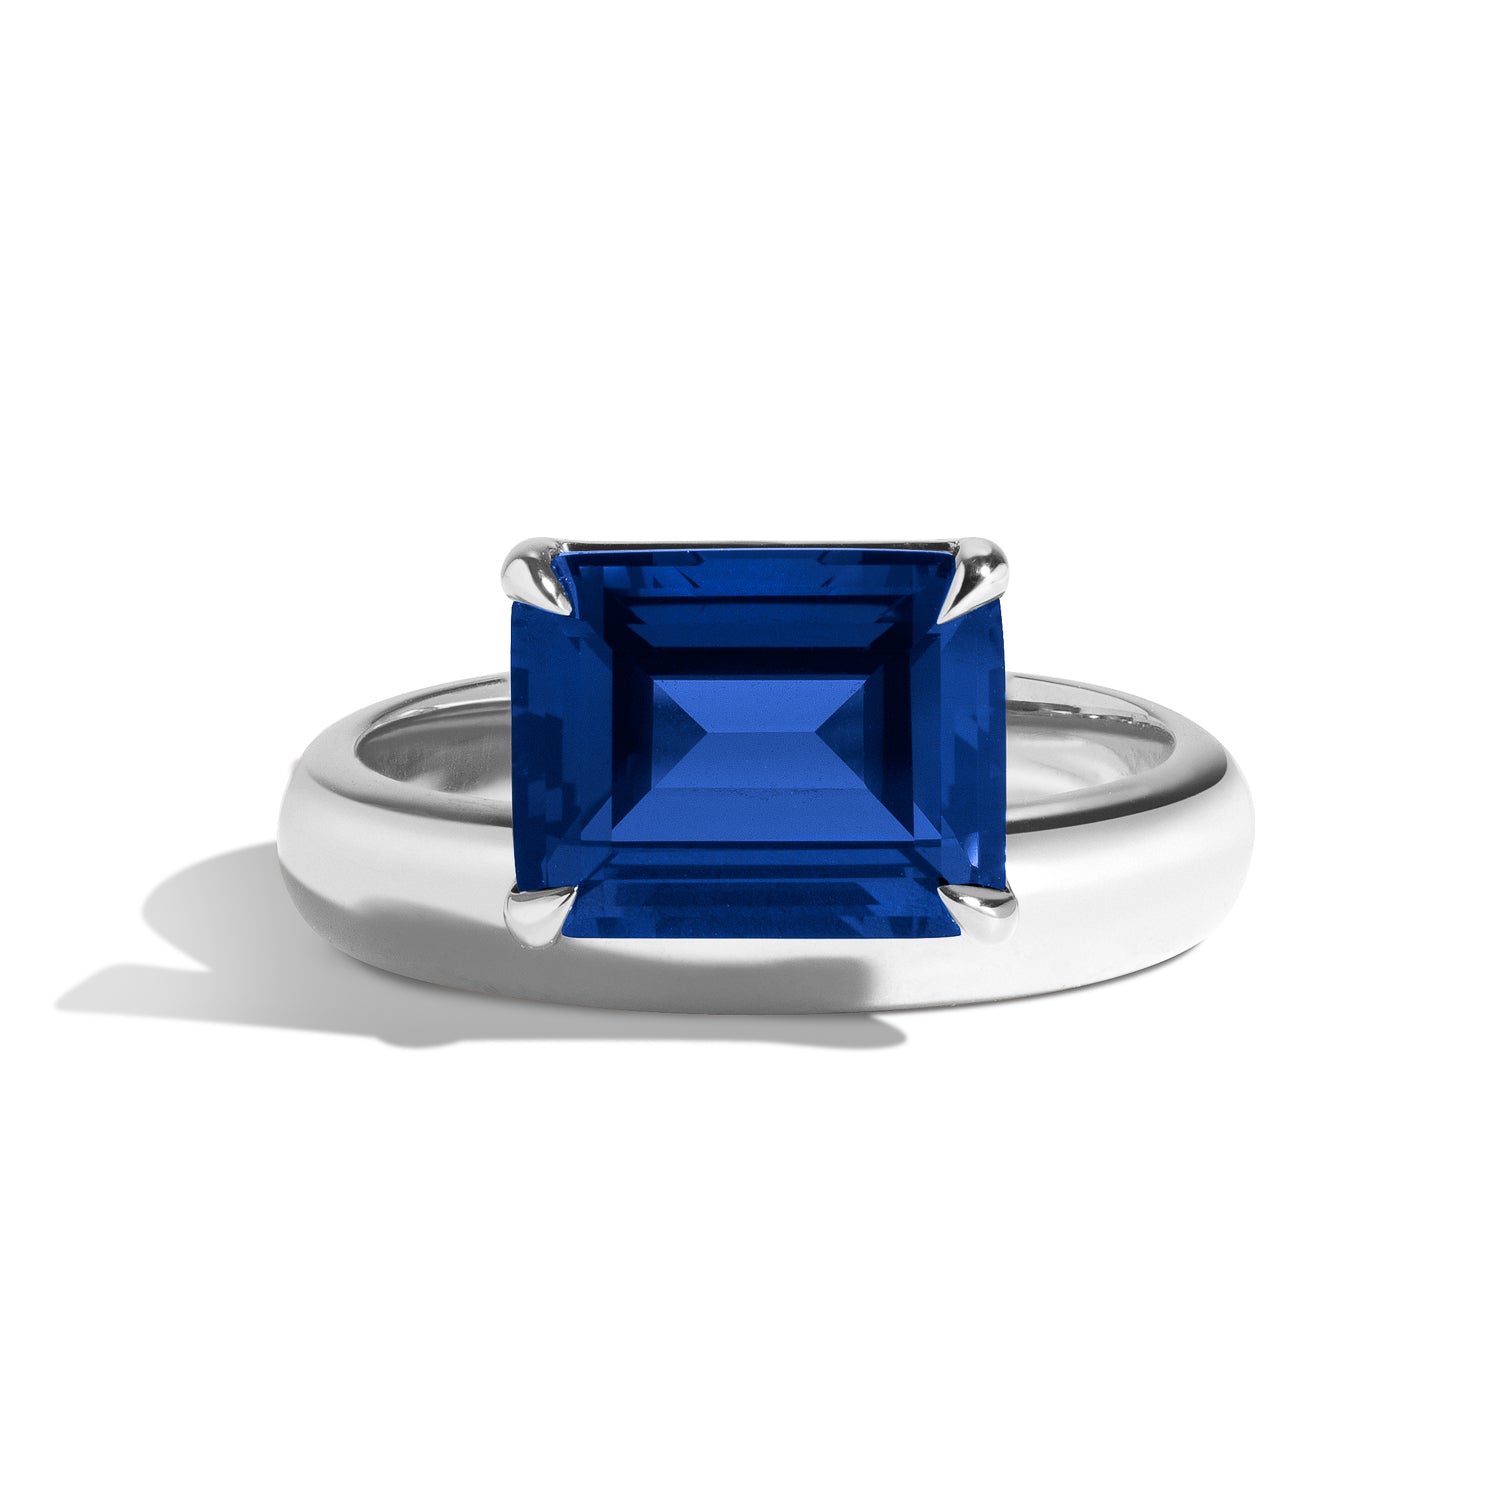 Shahla Karimi Jewelry Wright Emerald Cut Sapphire Offset Donut Ring 14K White Gold or Platinum